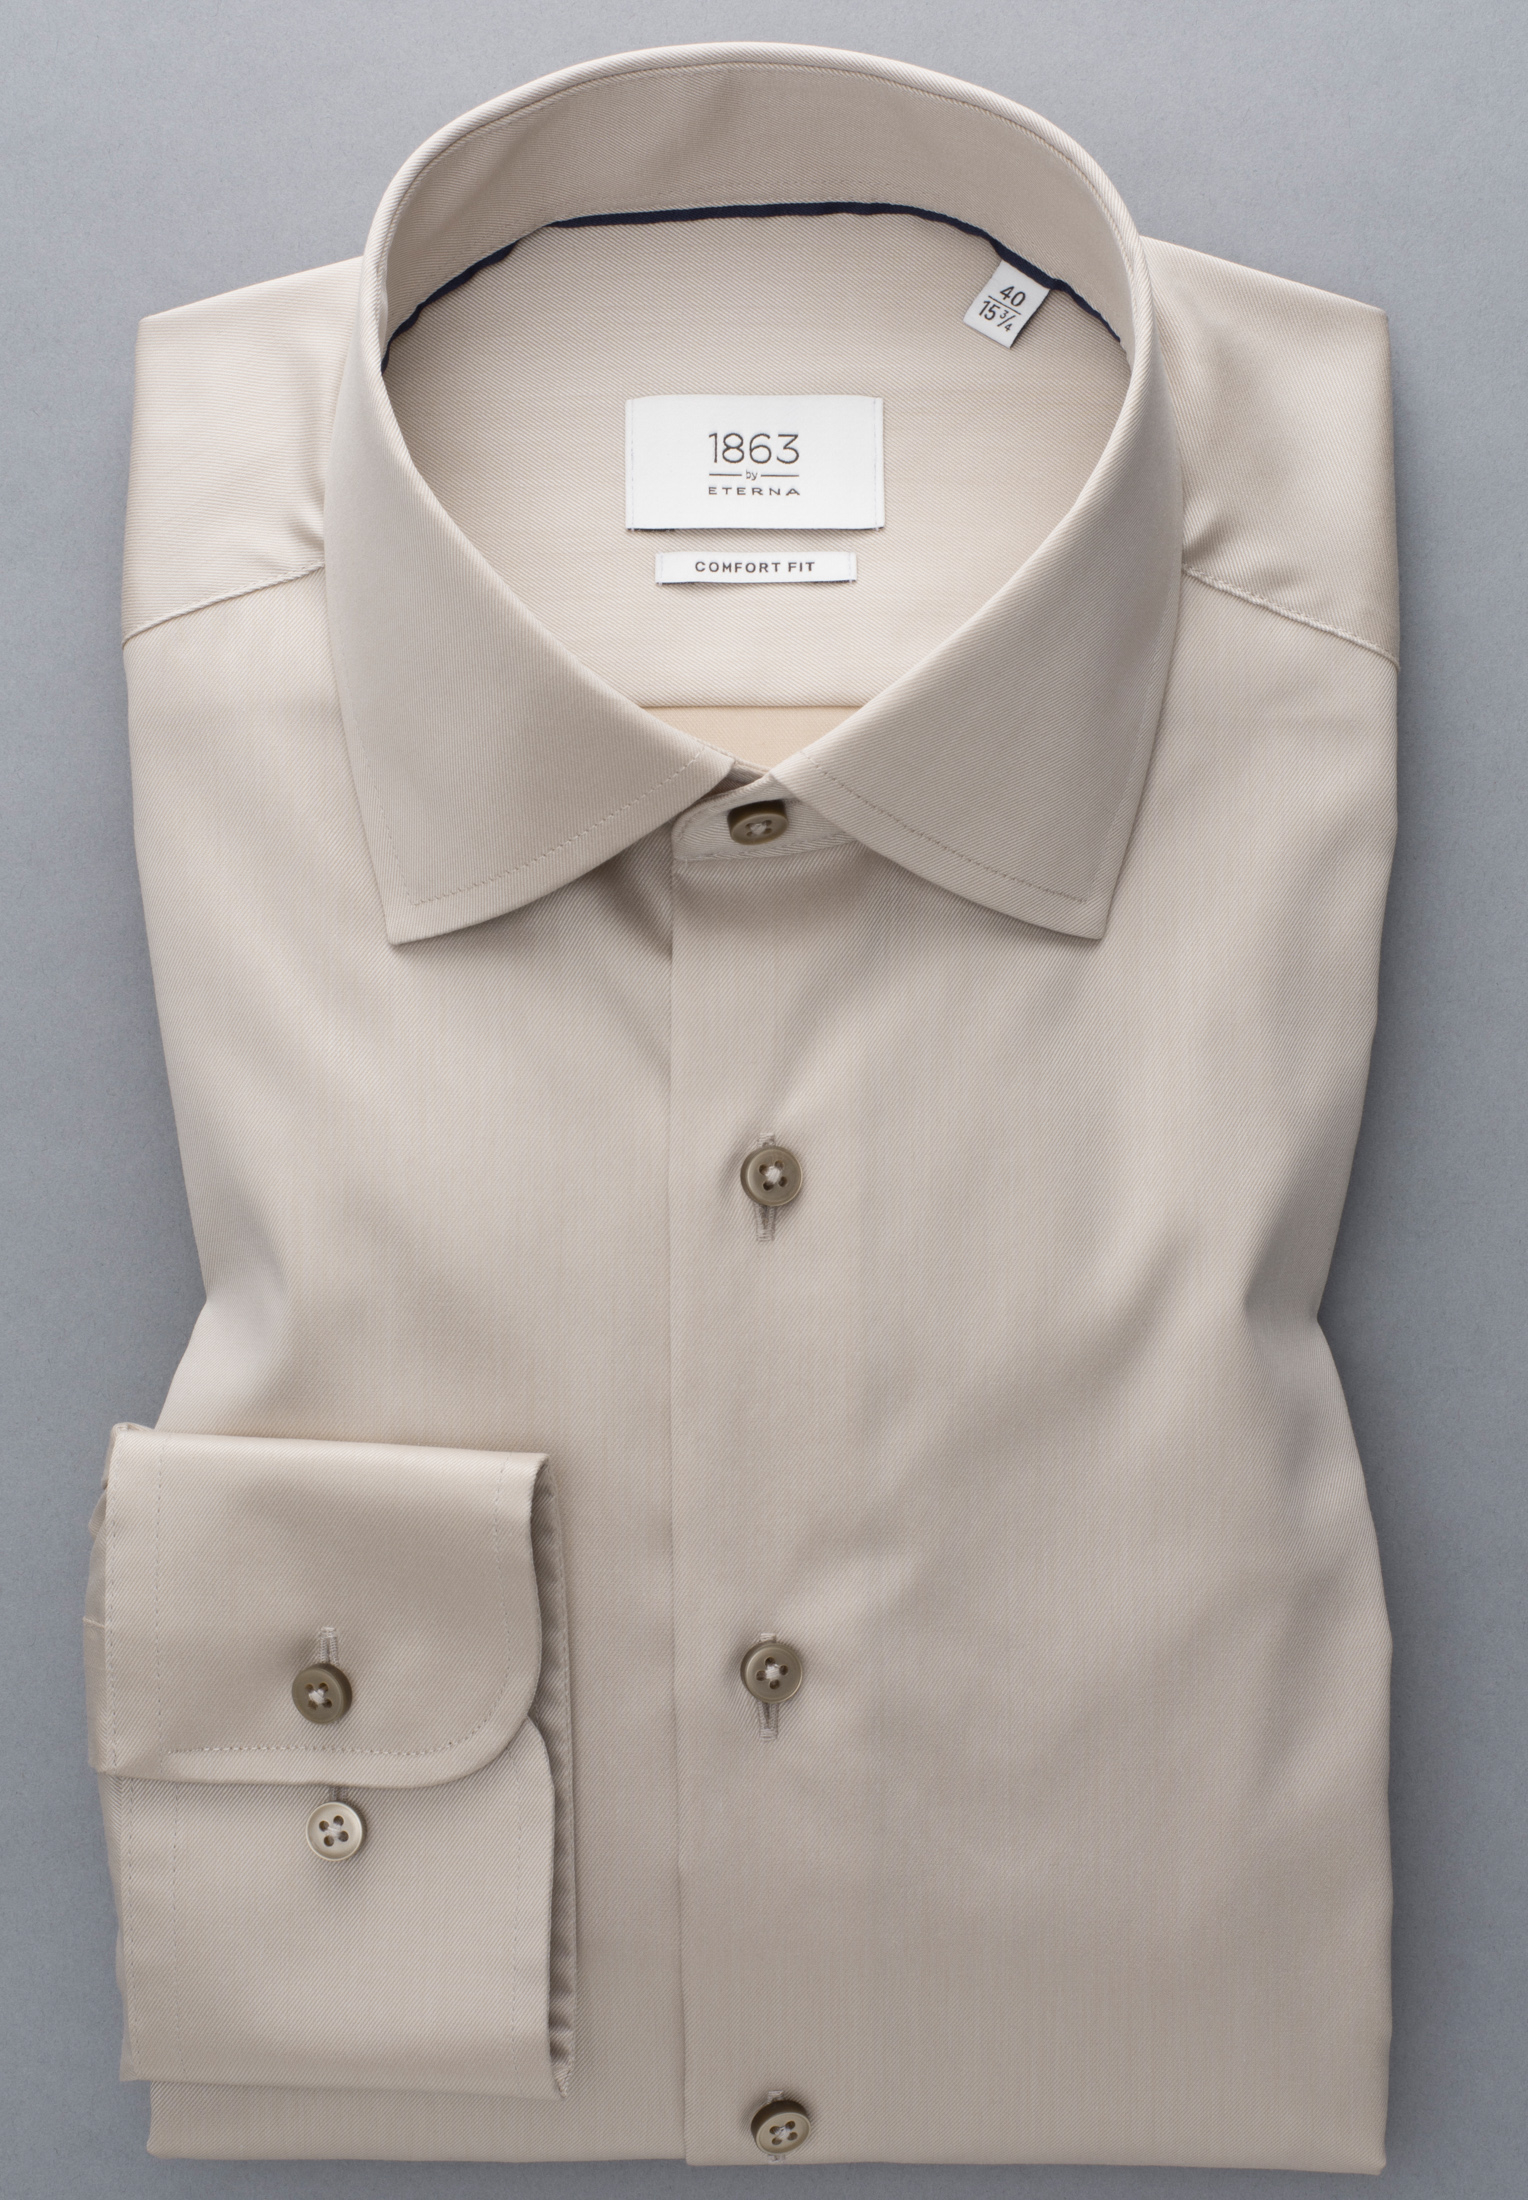 COMFORT FIT Luxury Shirt in unifarben | Langarm | | sand 40 1SH04924-02-11-40-1/1 sand 